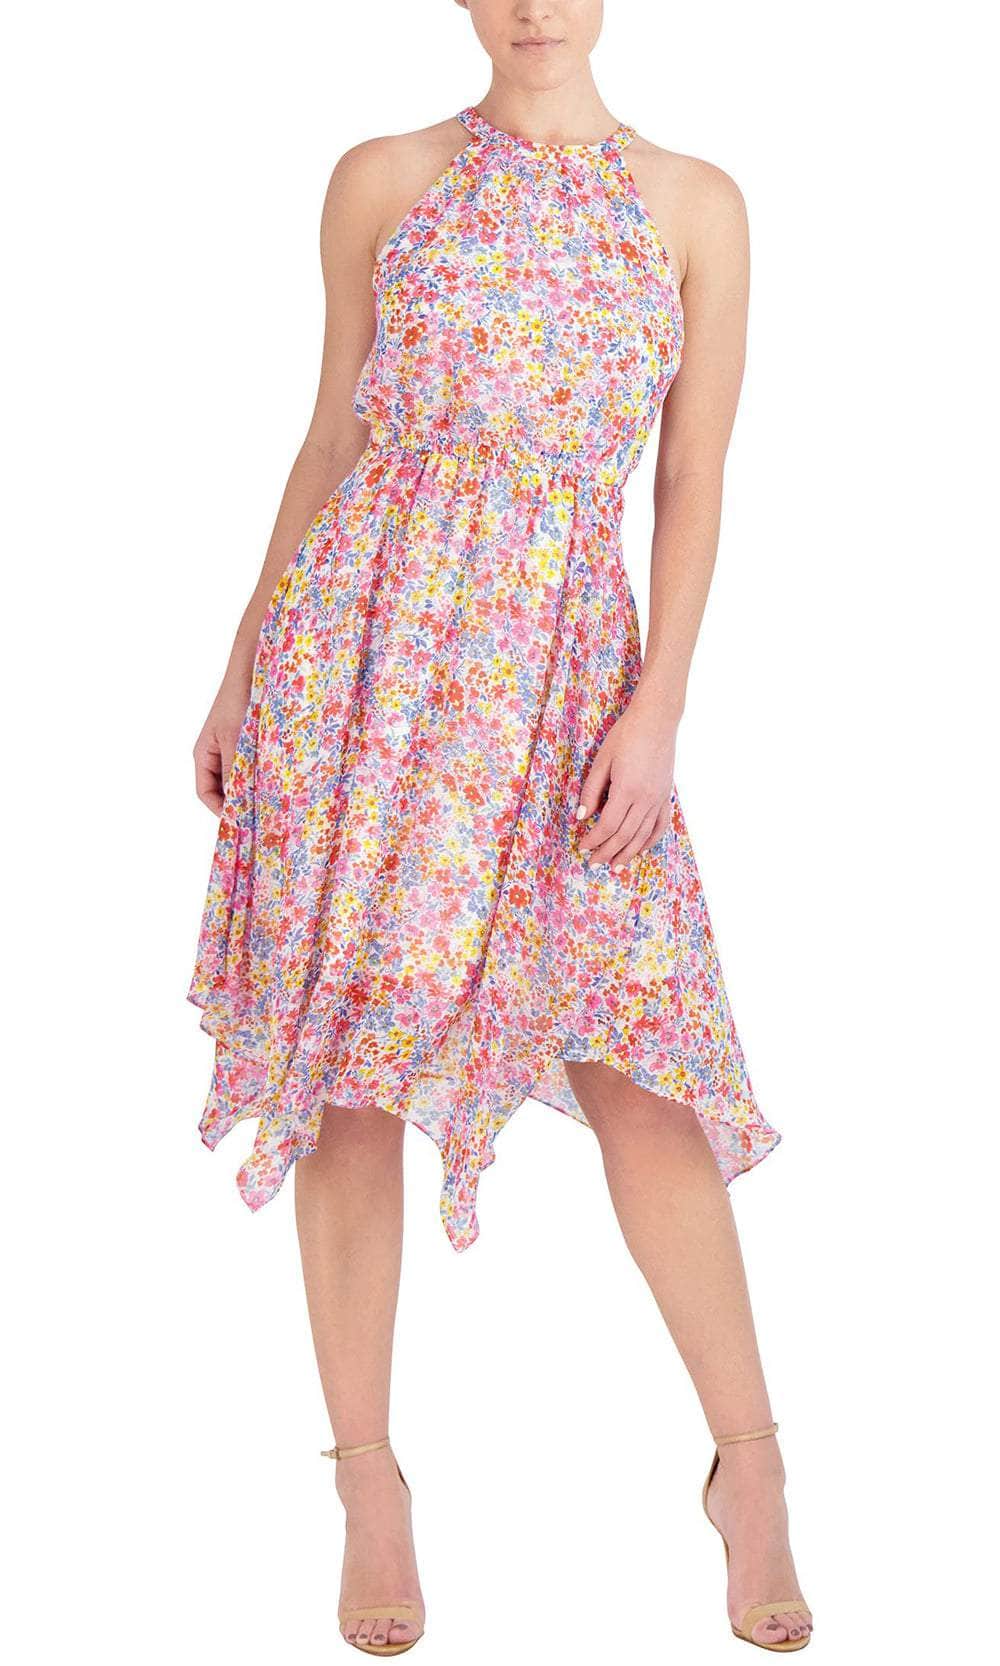 BCBG Generation GV01D72 - Halter Print Short Dress Cocktail Dresses XS / Spring Blossoms